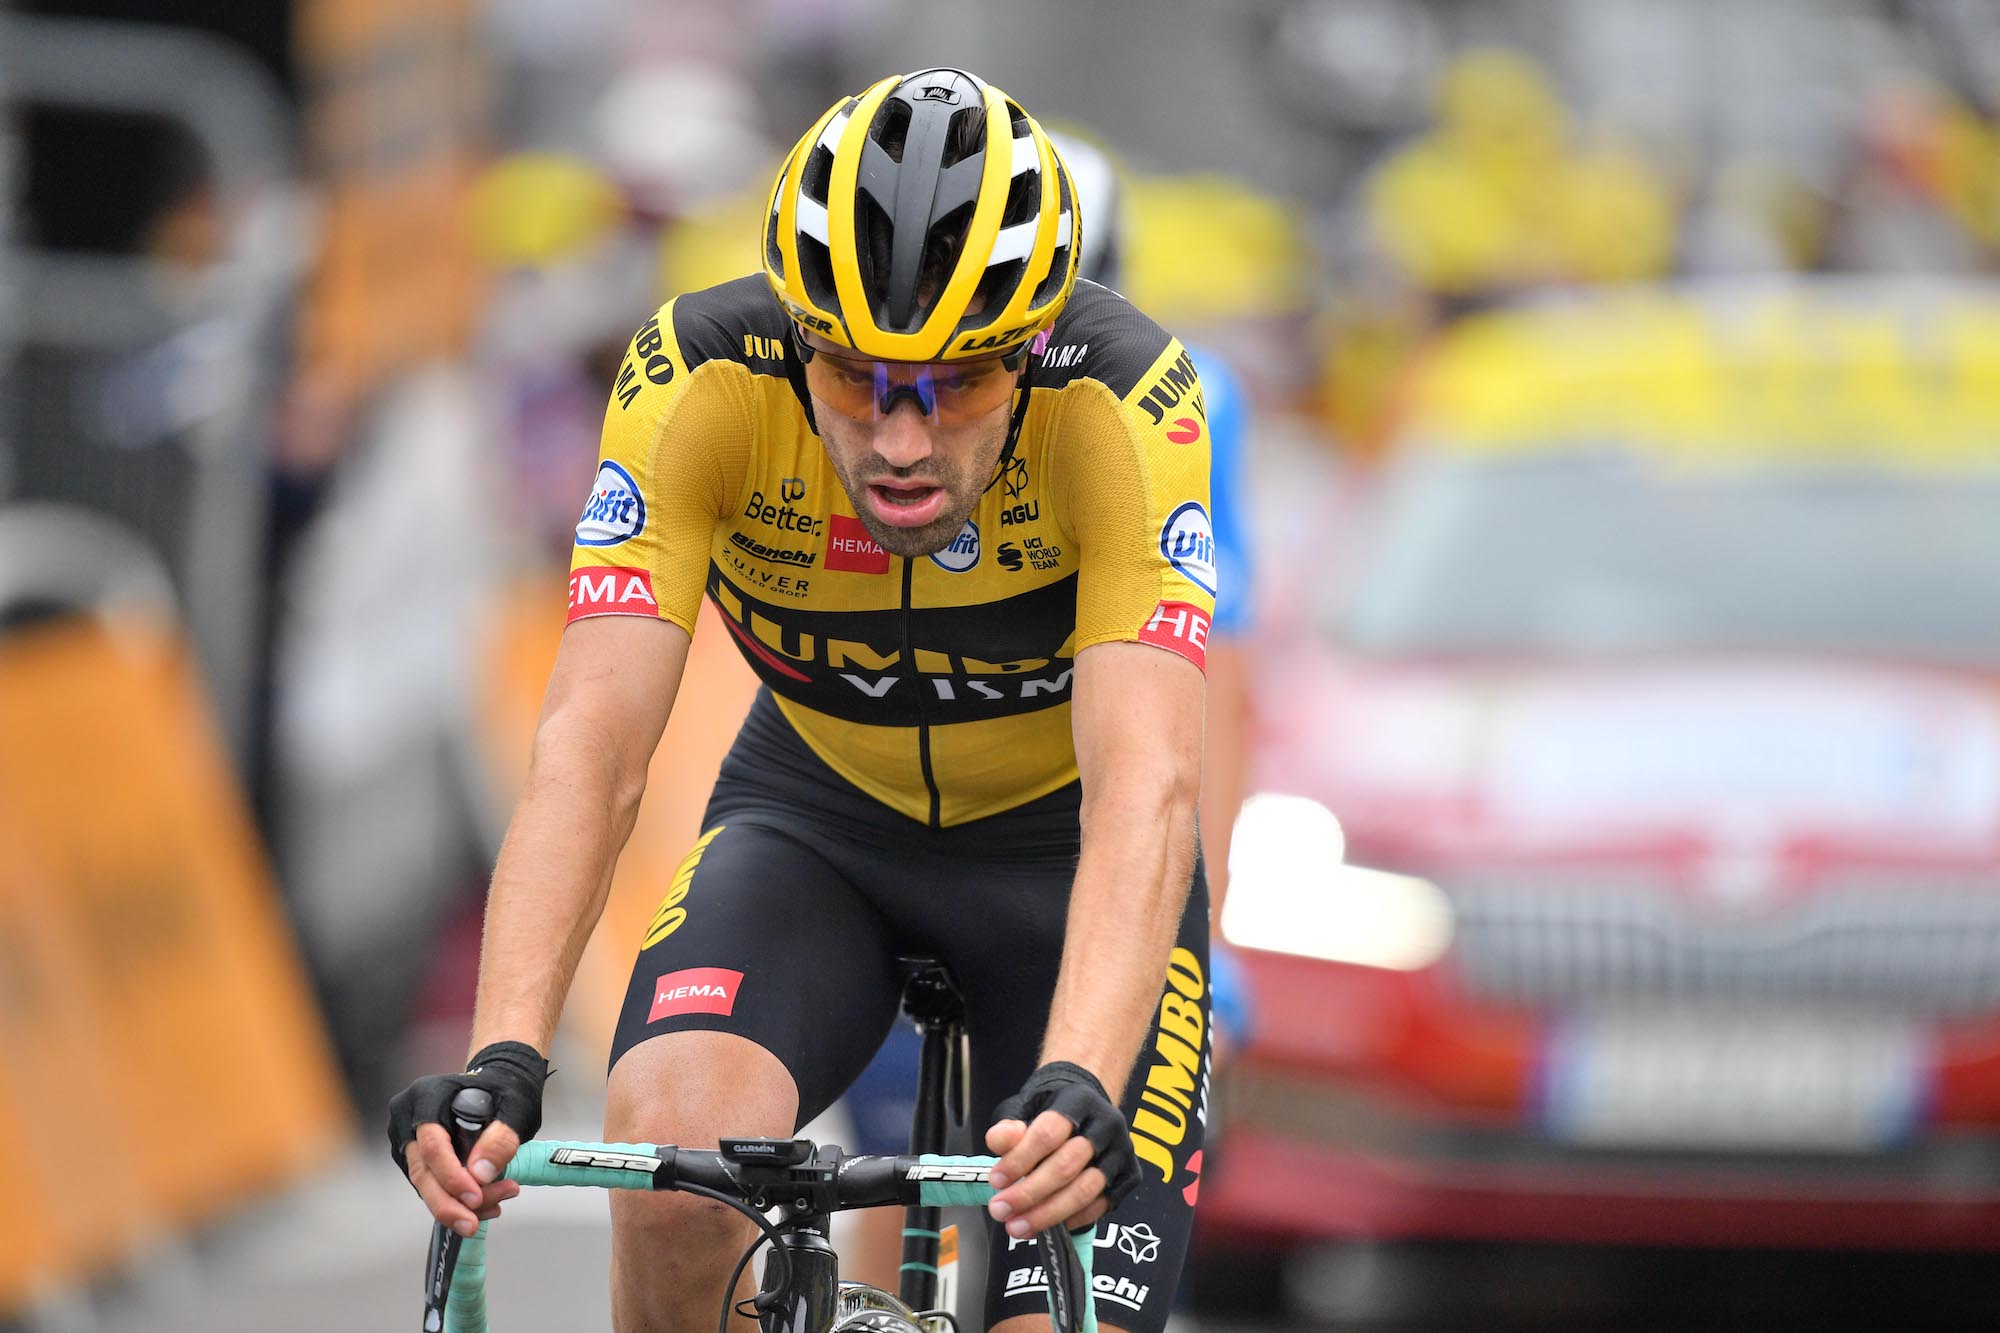 Tom Dumoulin reveals he was considering retirement before Tour de France 2020 | Weekly